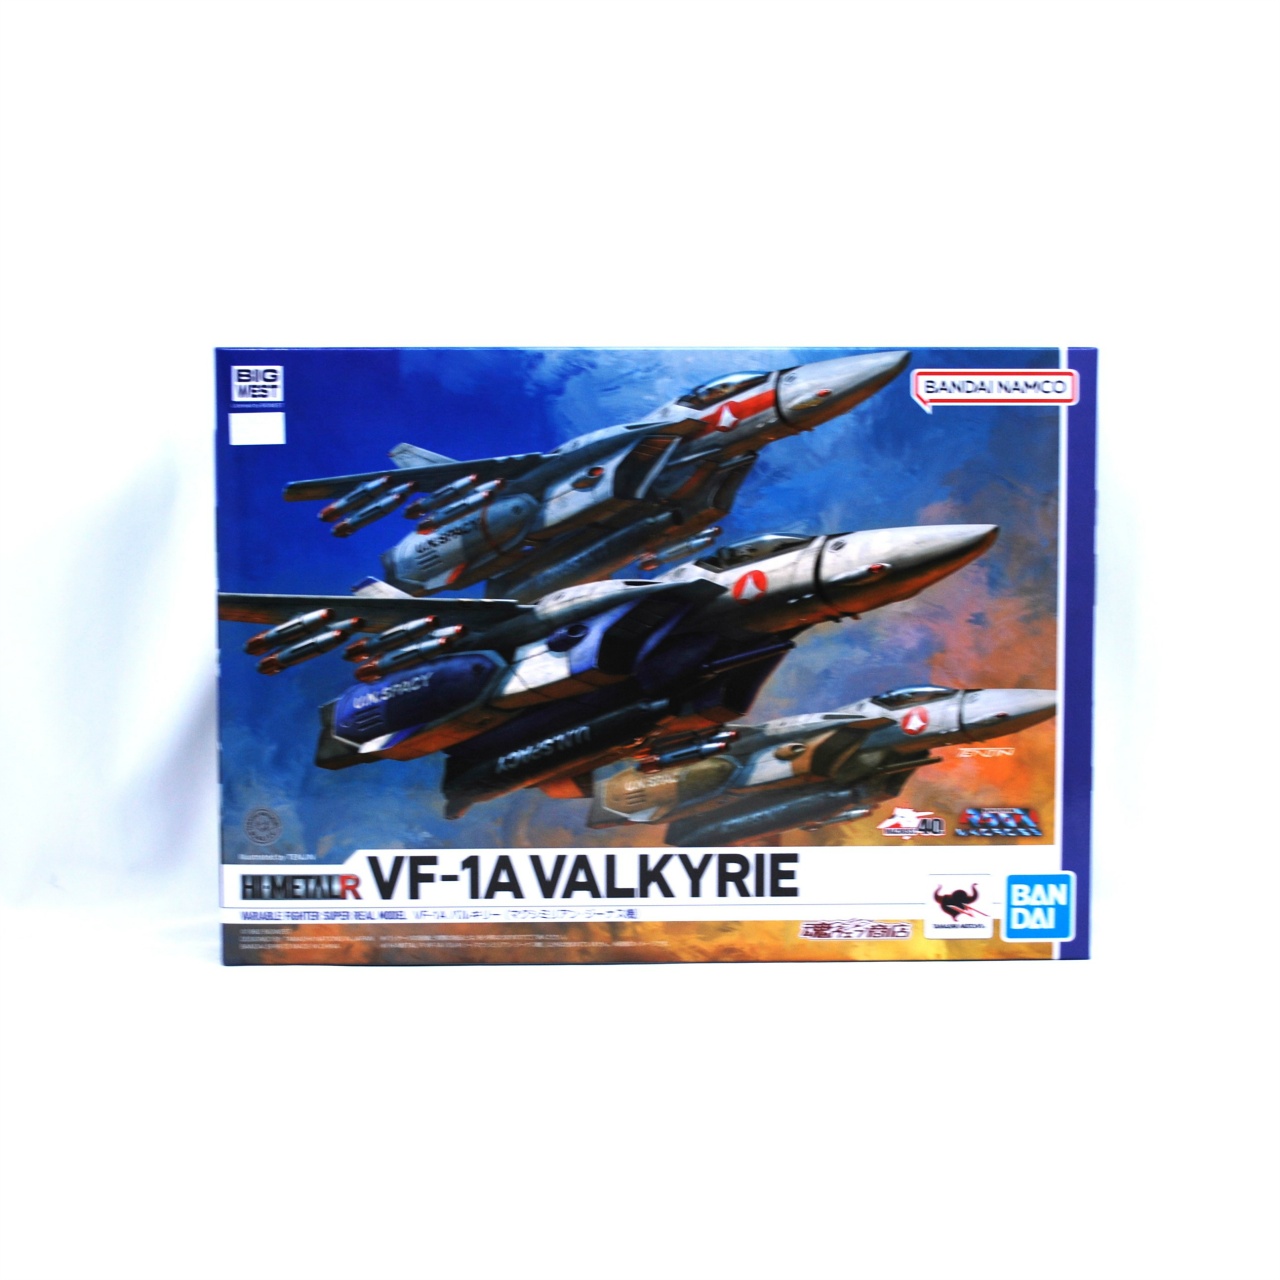 VF HI-METAL R VF-1A バルキリー(マクシミリアン・ジーナス機) マクロス